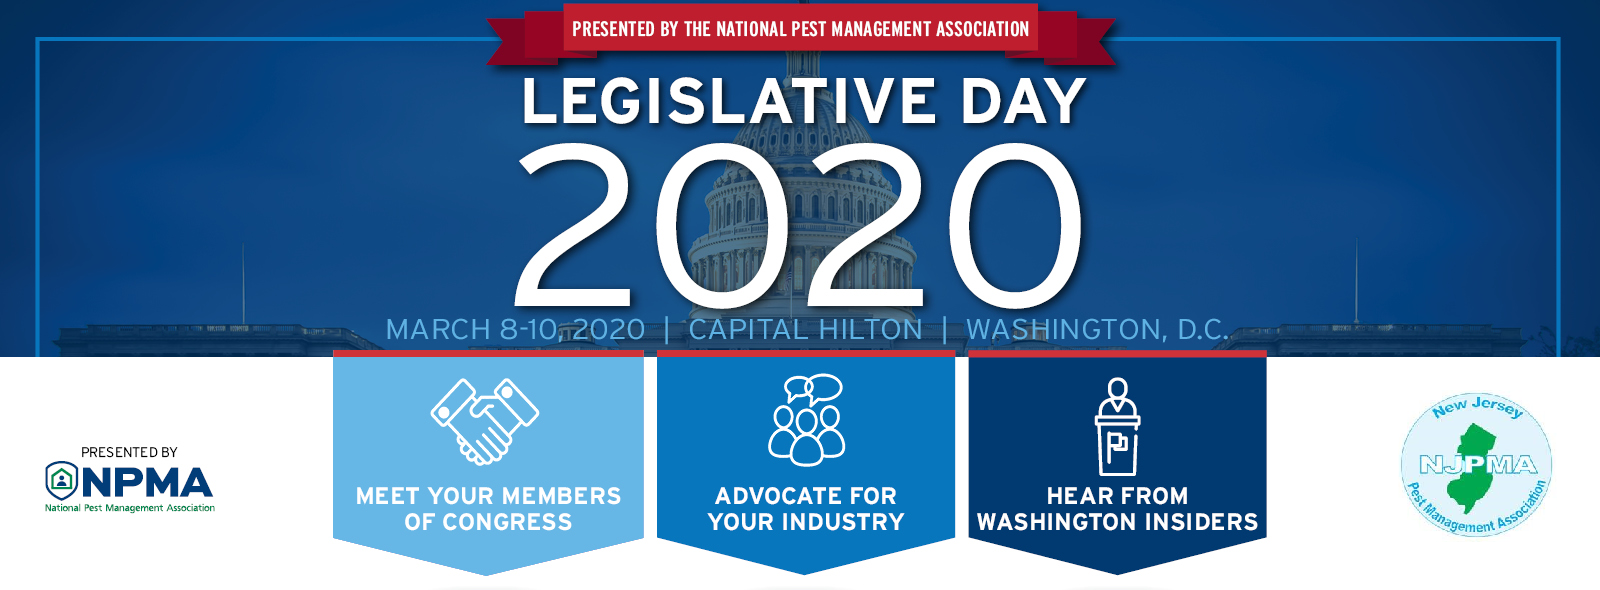 NPMA LegislativeDay New Jersey Pest Management Association